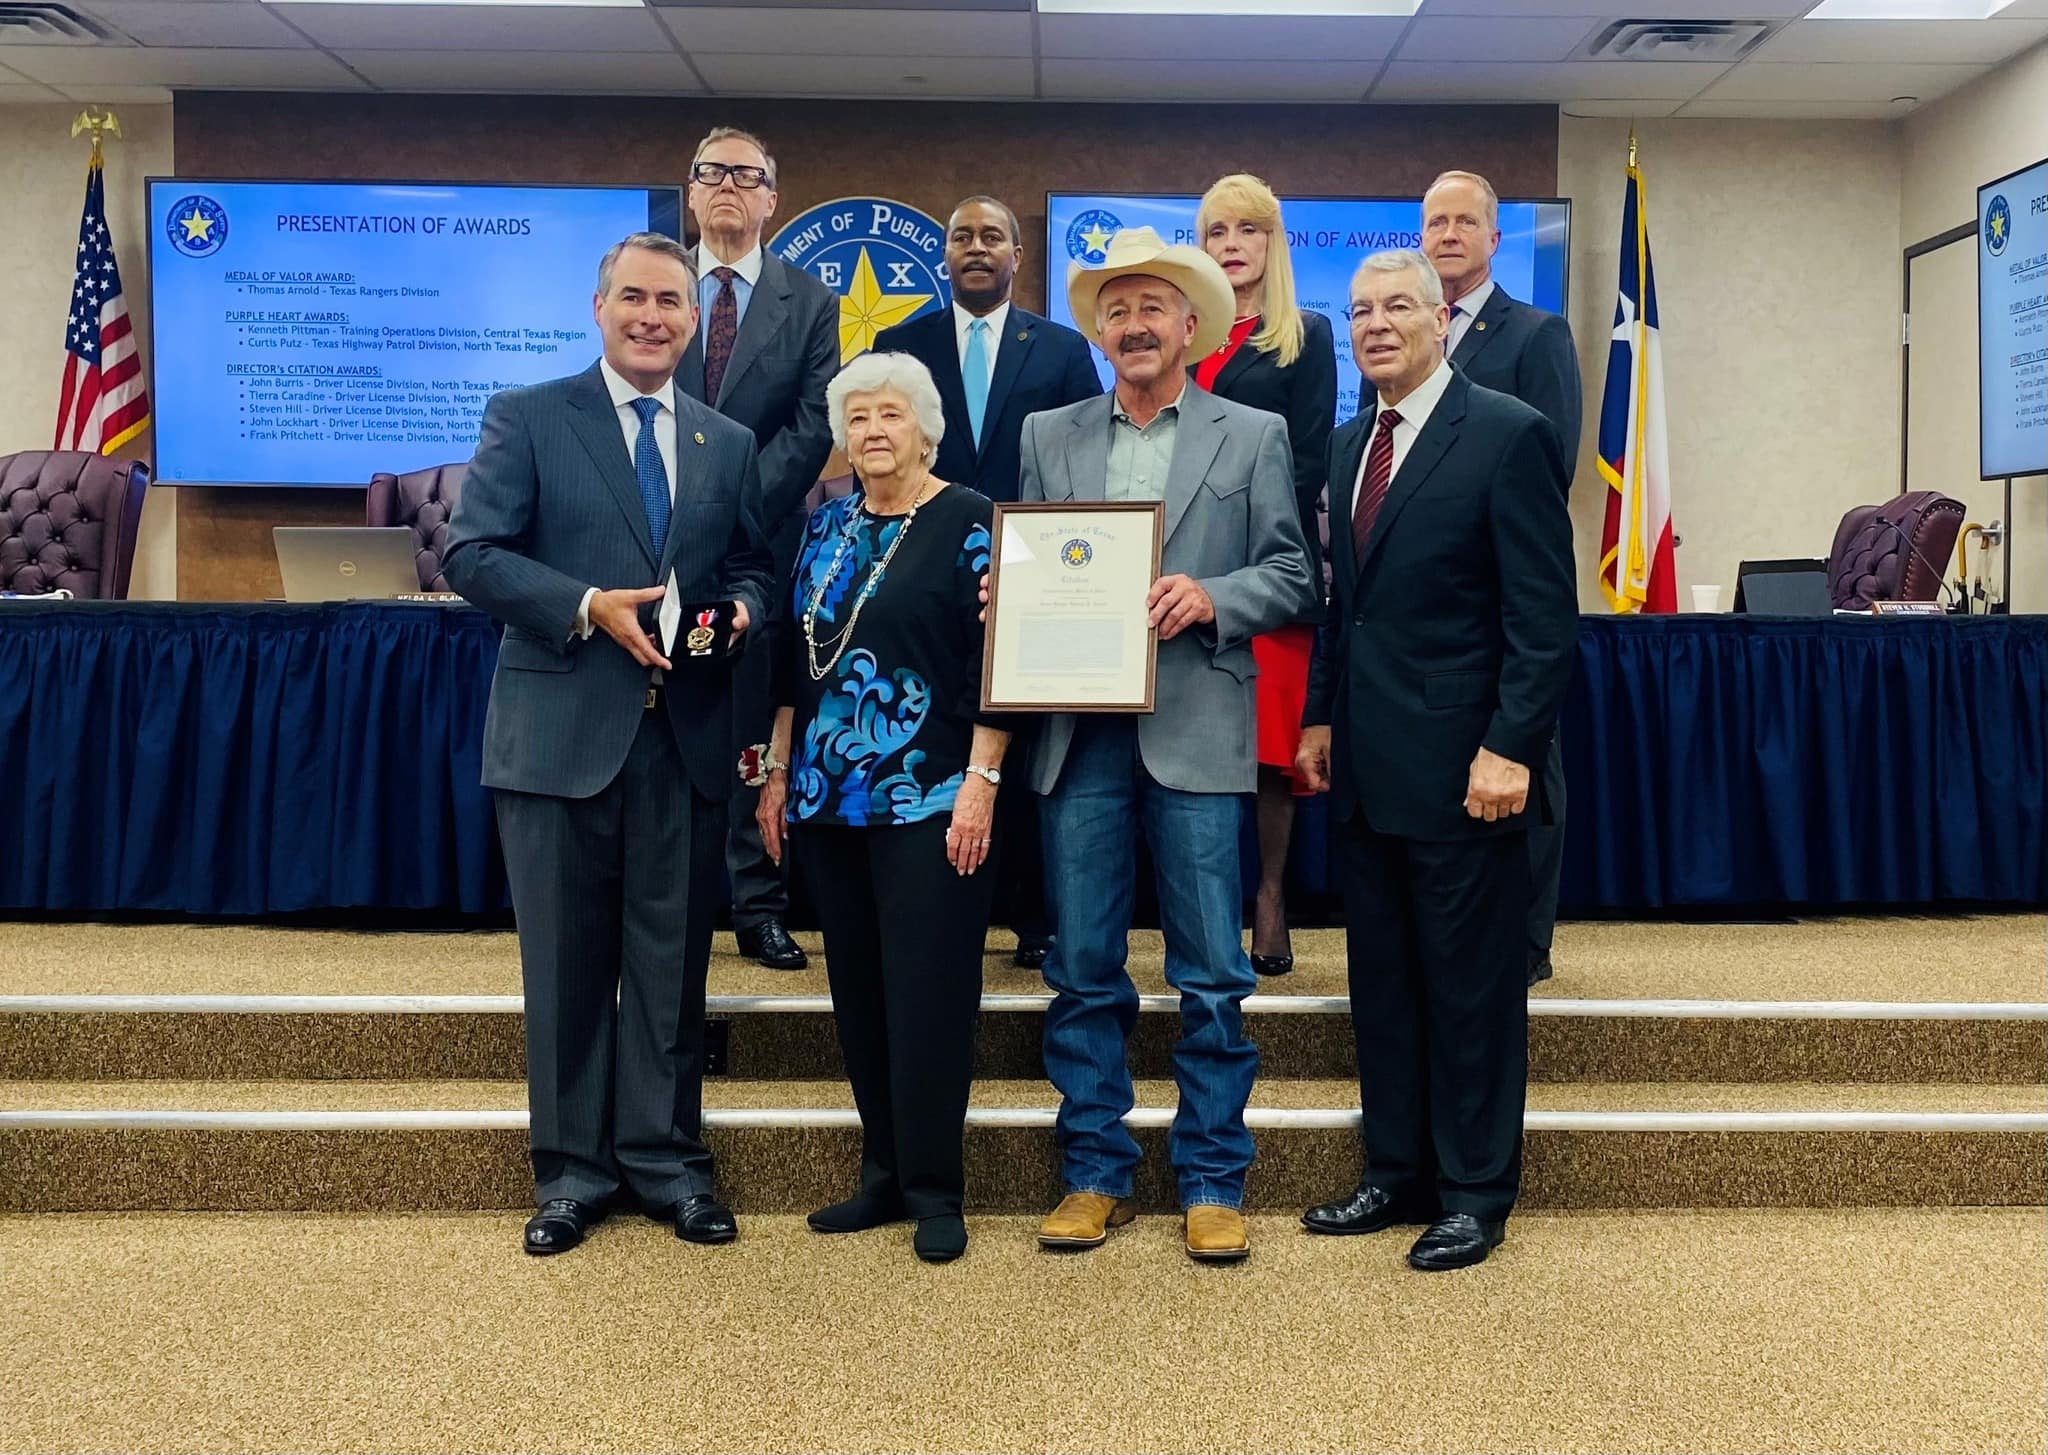  Texas Ranger Thomas Arnold's family accepts the Medal of Valor on his behalf